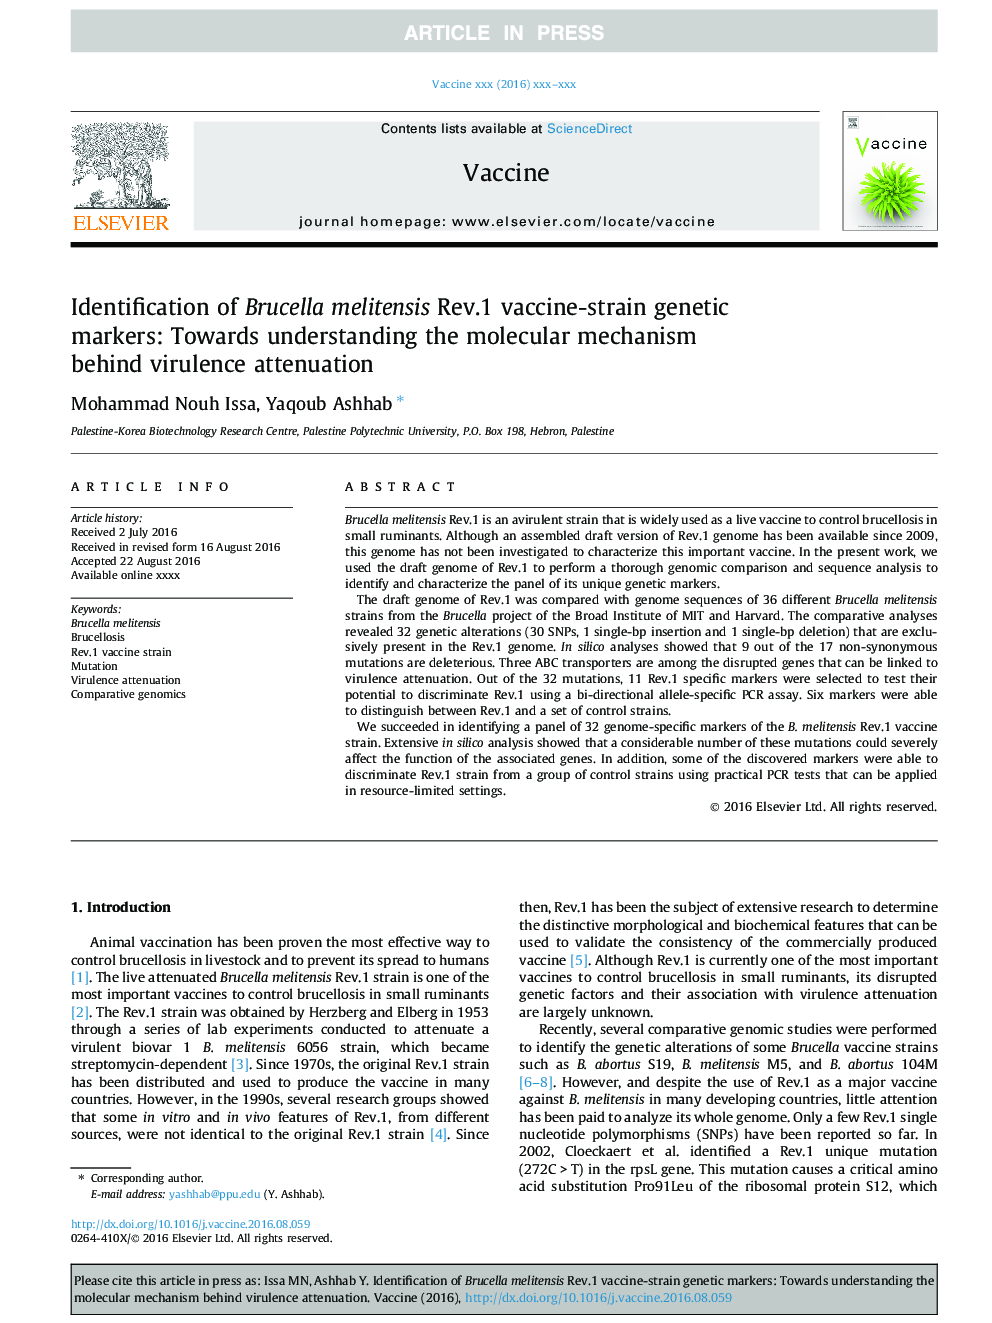 Identification of Brucella melitensis Rev.1 vaccine-strain genetic markers: Towards understanding the molecular mechanism behind virulence attenuation